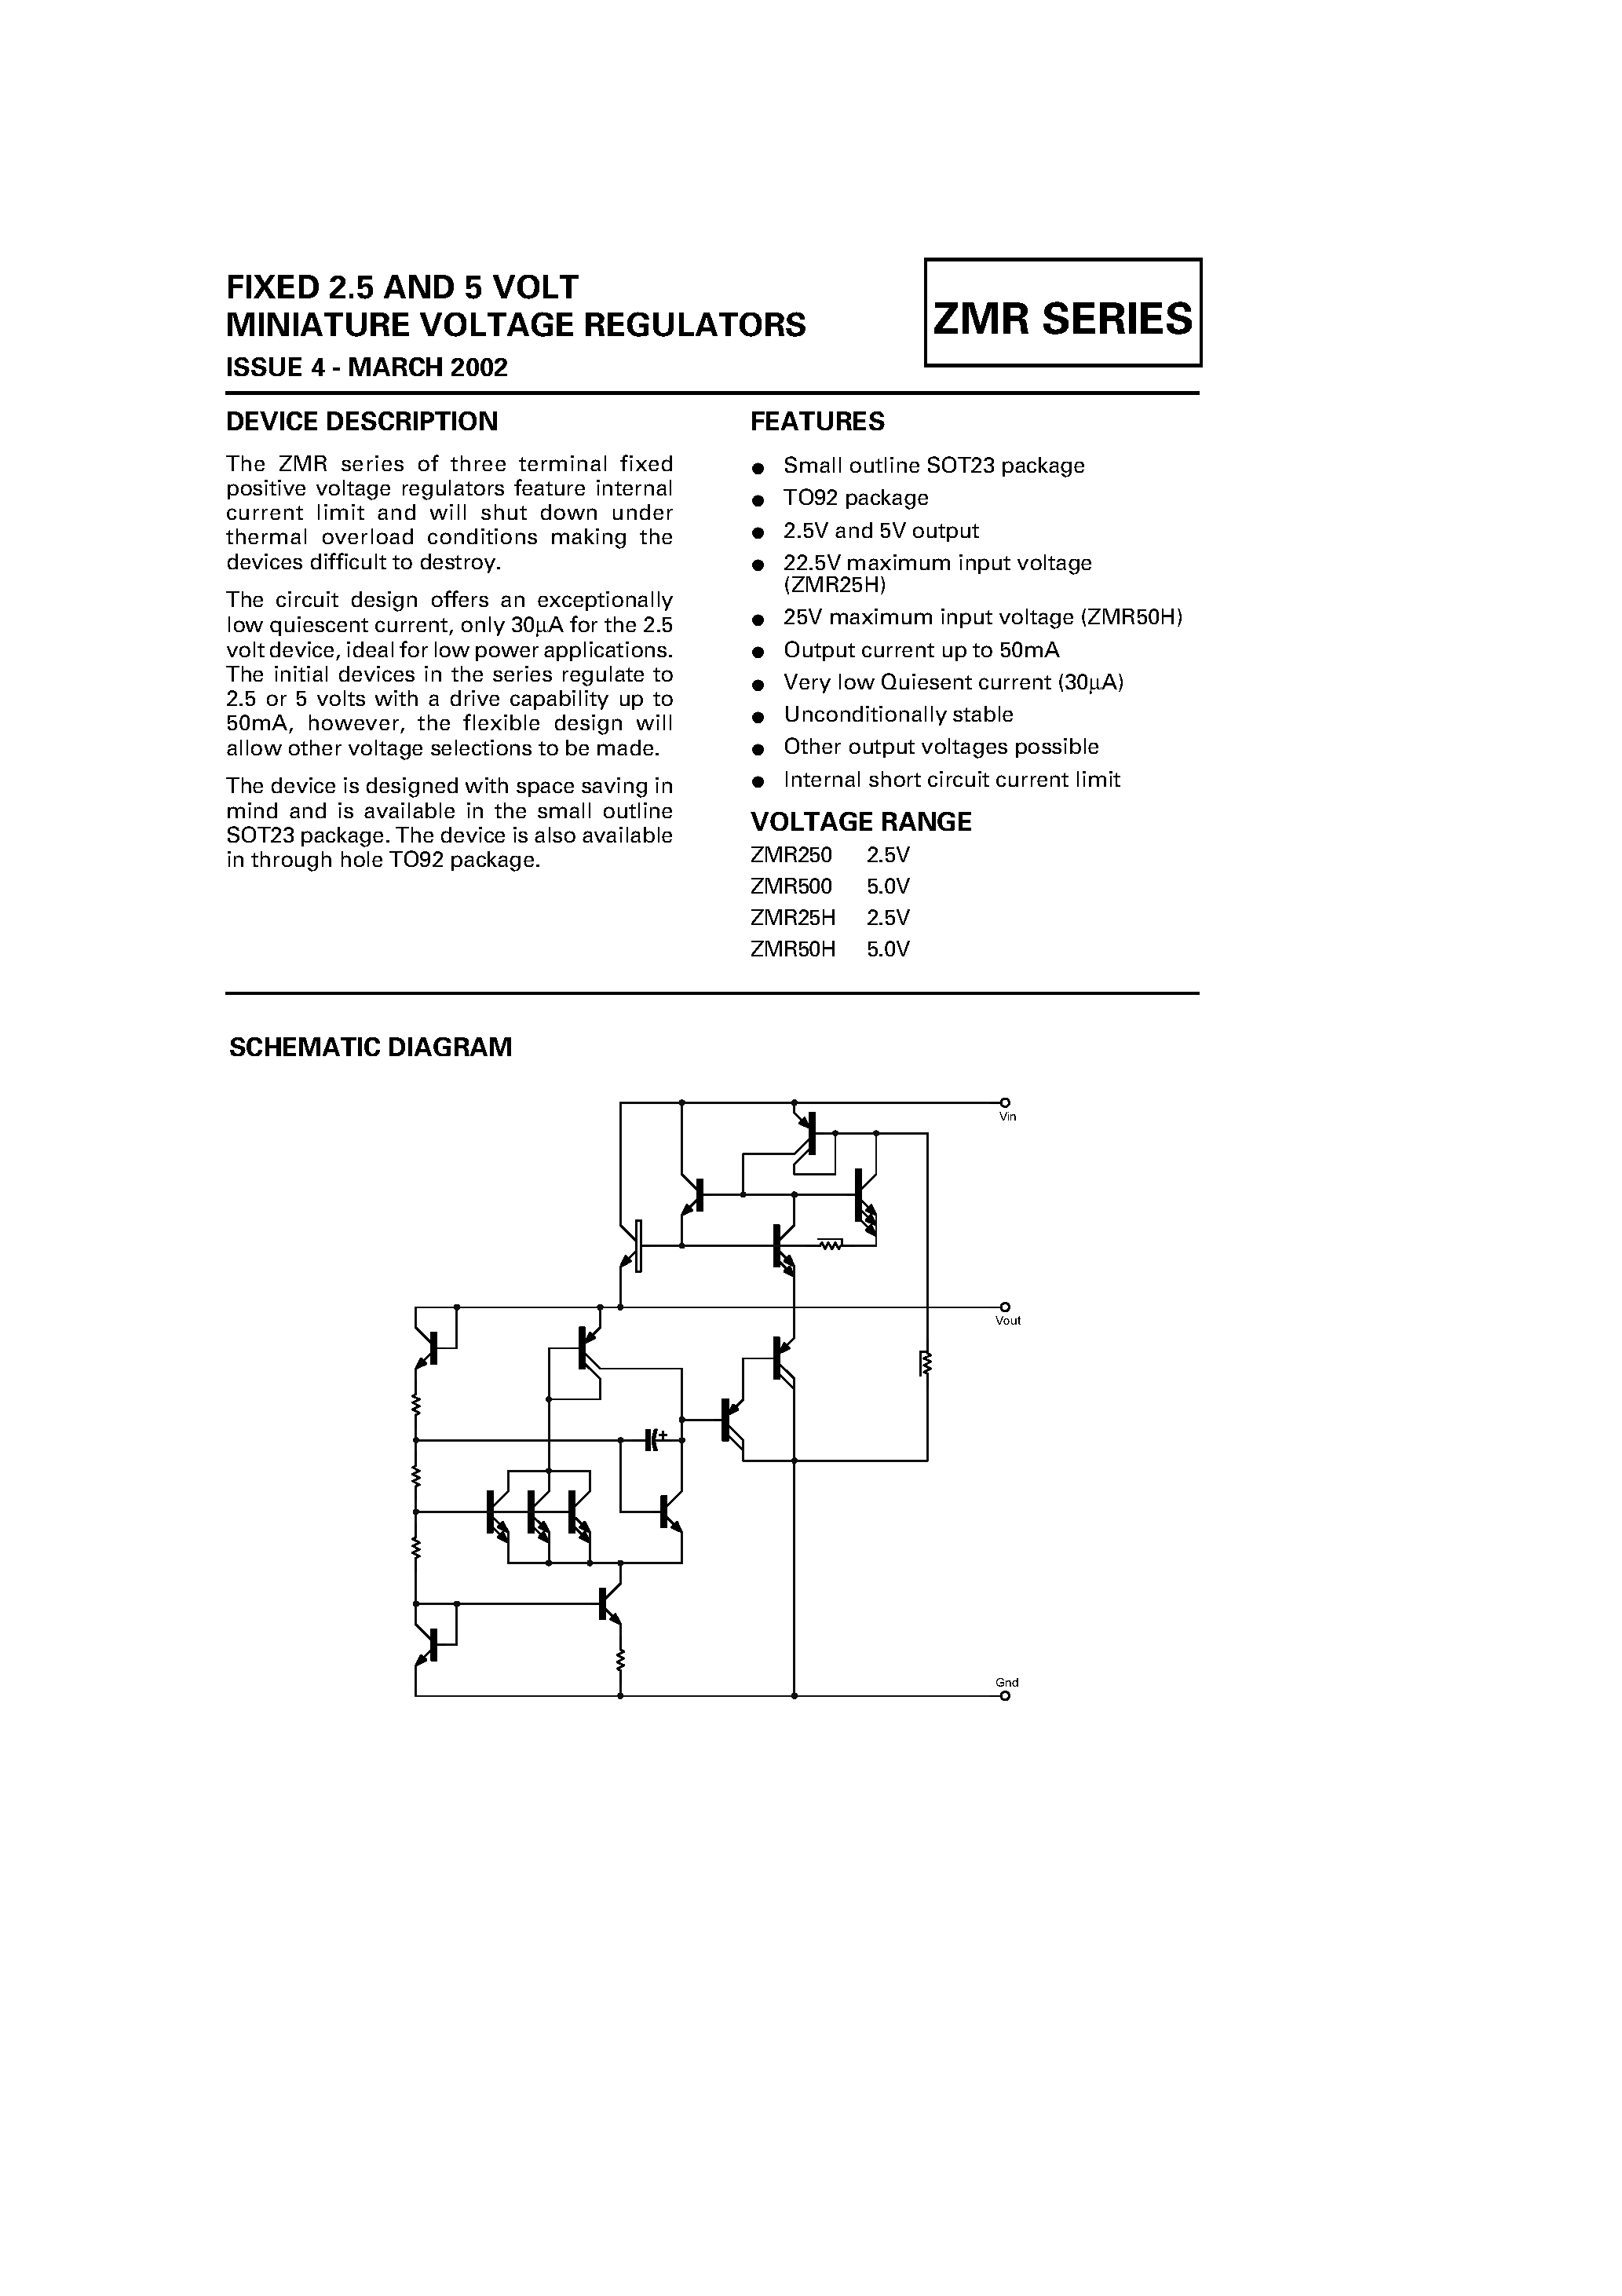 Datasheet ZMR500 - FIXED 2.5 AND 5 VOLT MINIATURE VOLTAGE REGULATORS page 1